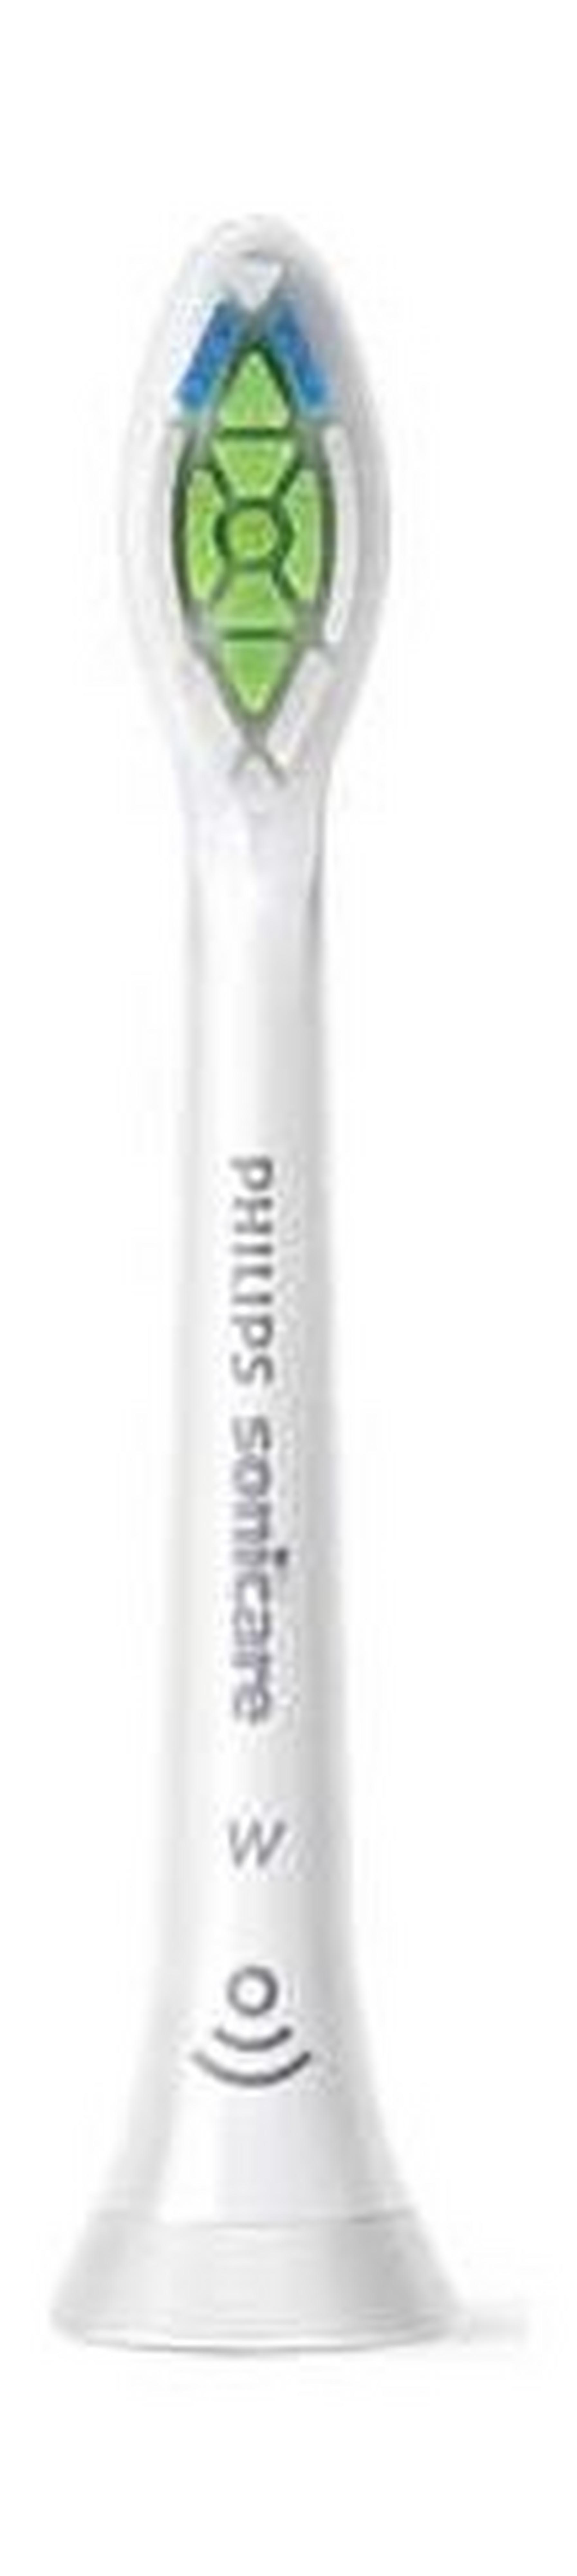 Philips Sonicare W2 Optimal White Standard Sonic Toothbrush Heads - White